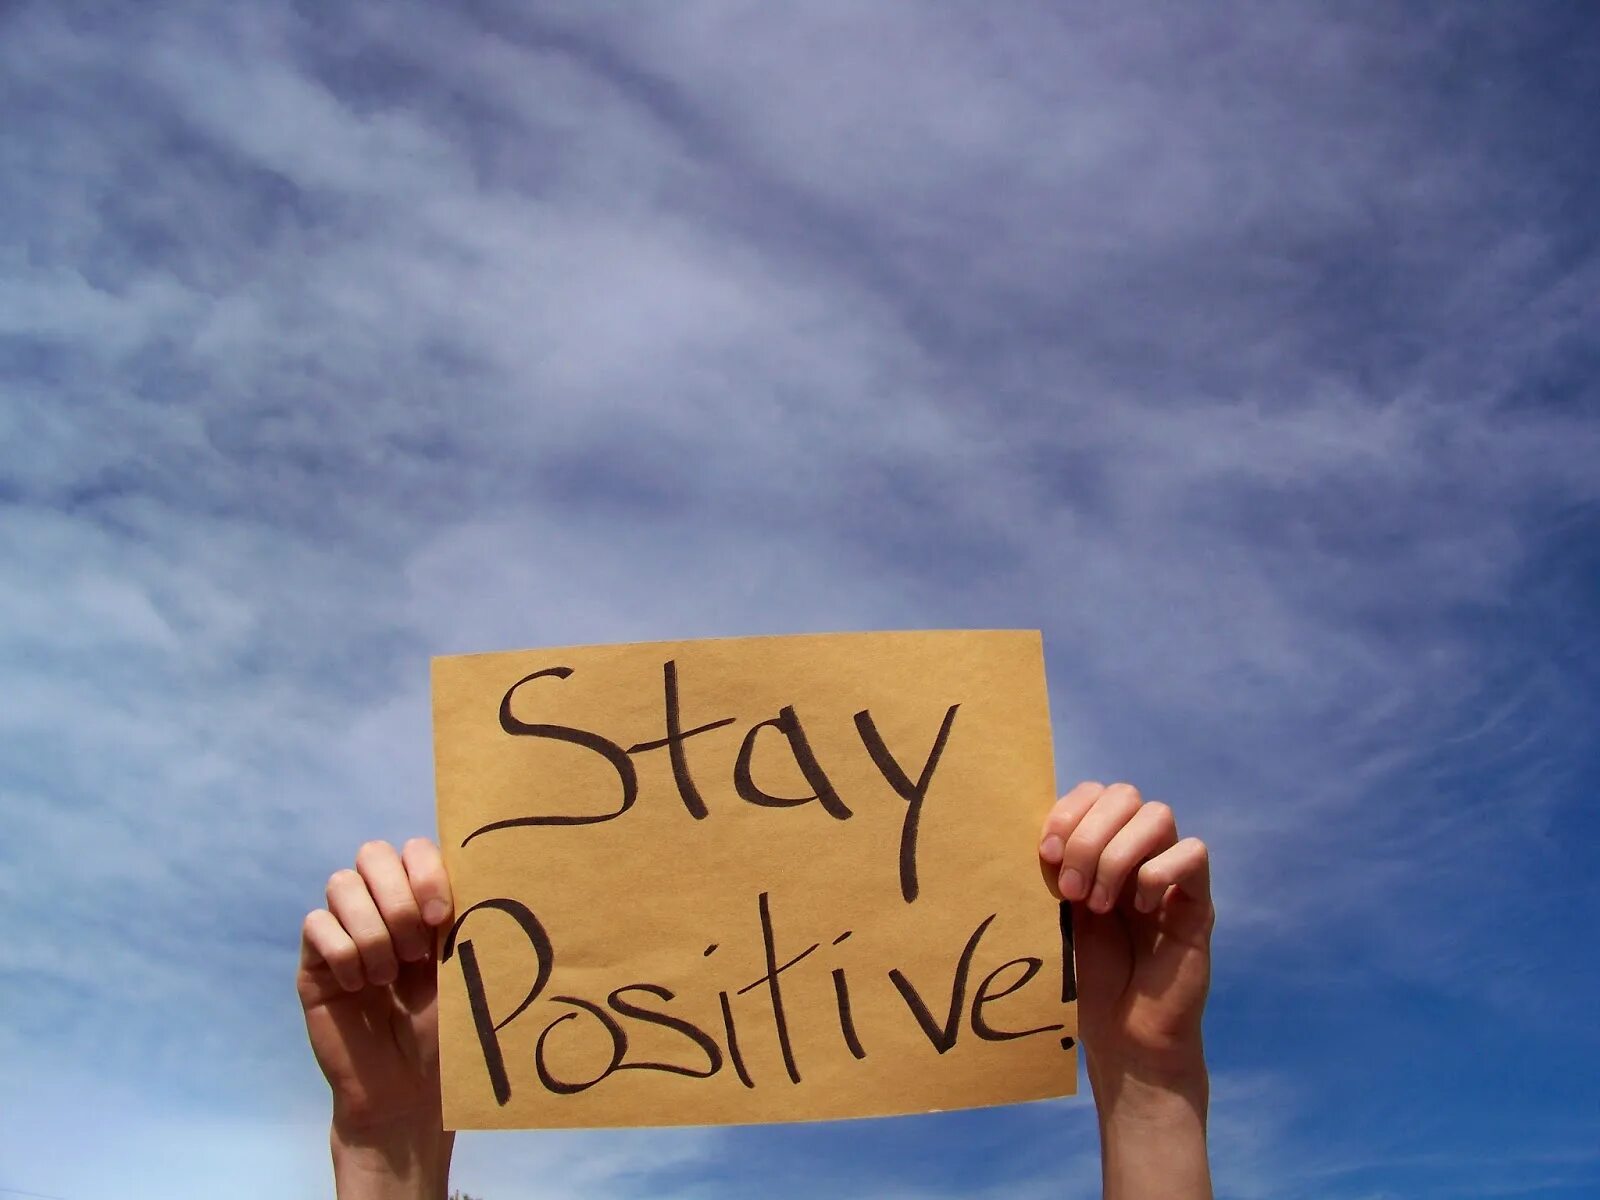 Positive картинки. Think positive картинки. Stay positive картинки. Stay positive обои.